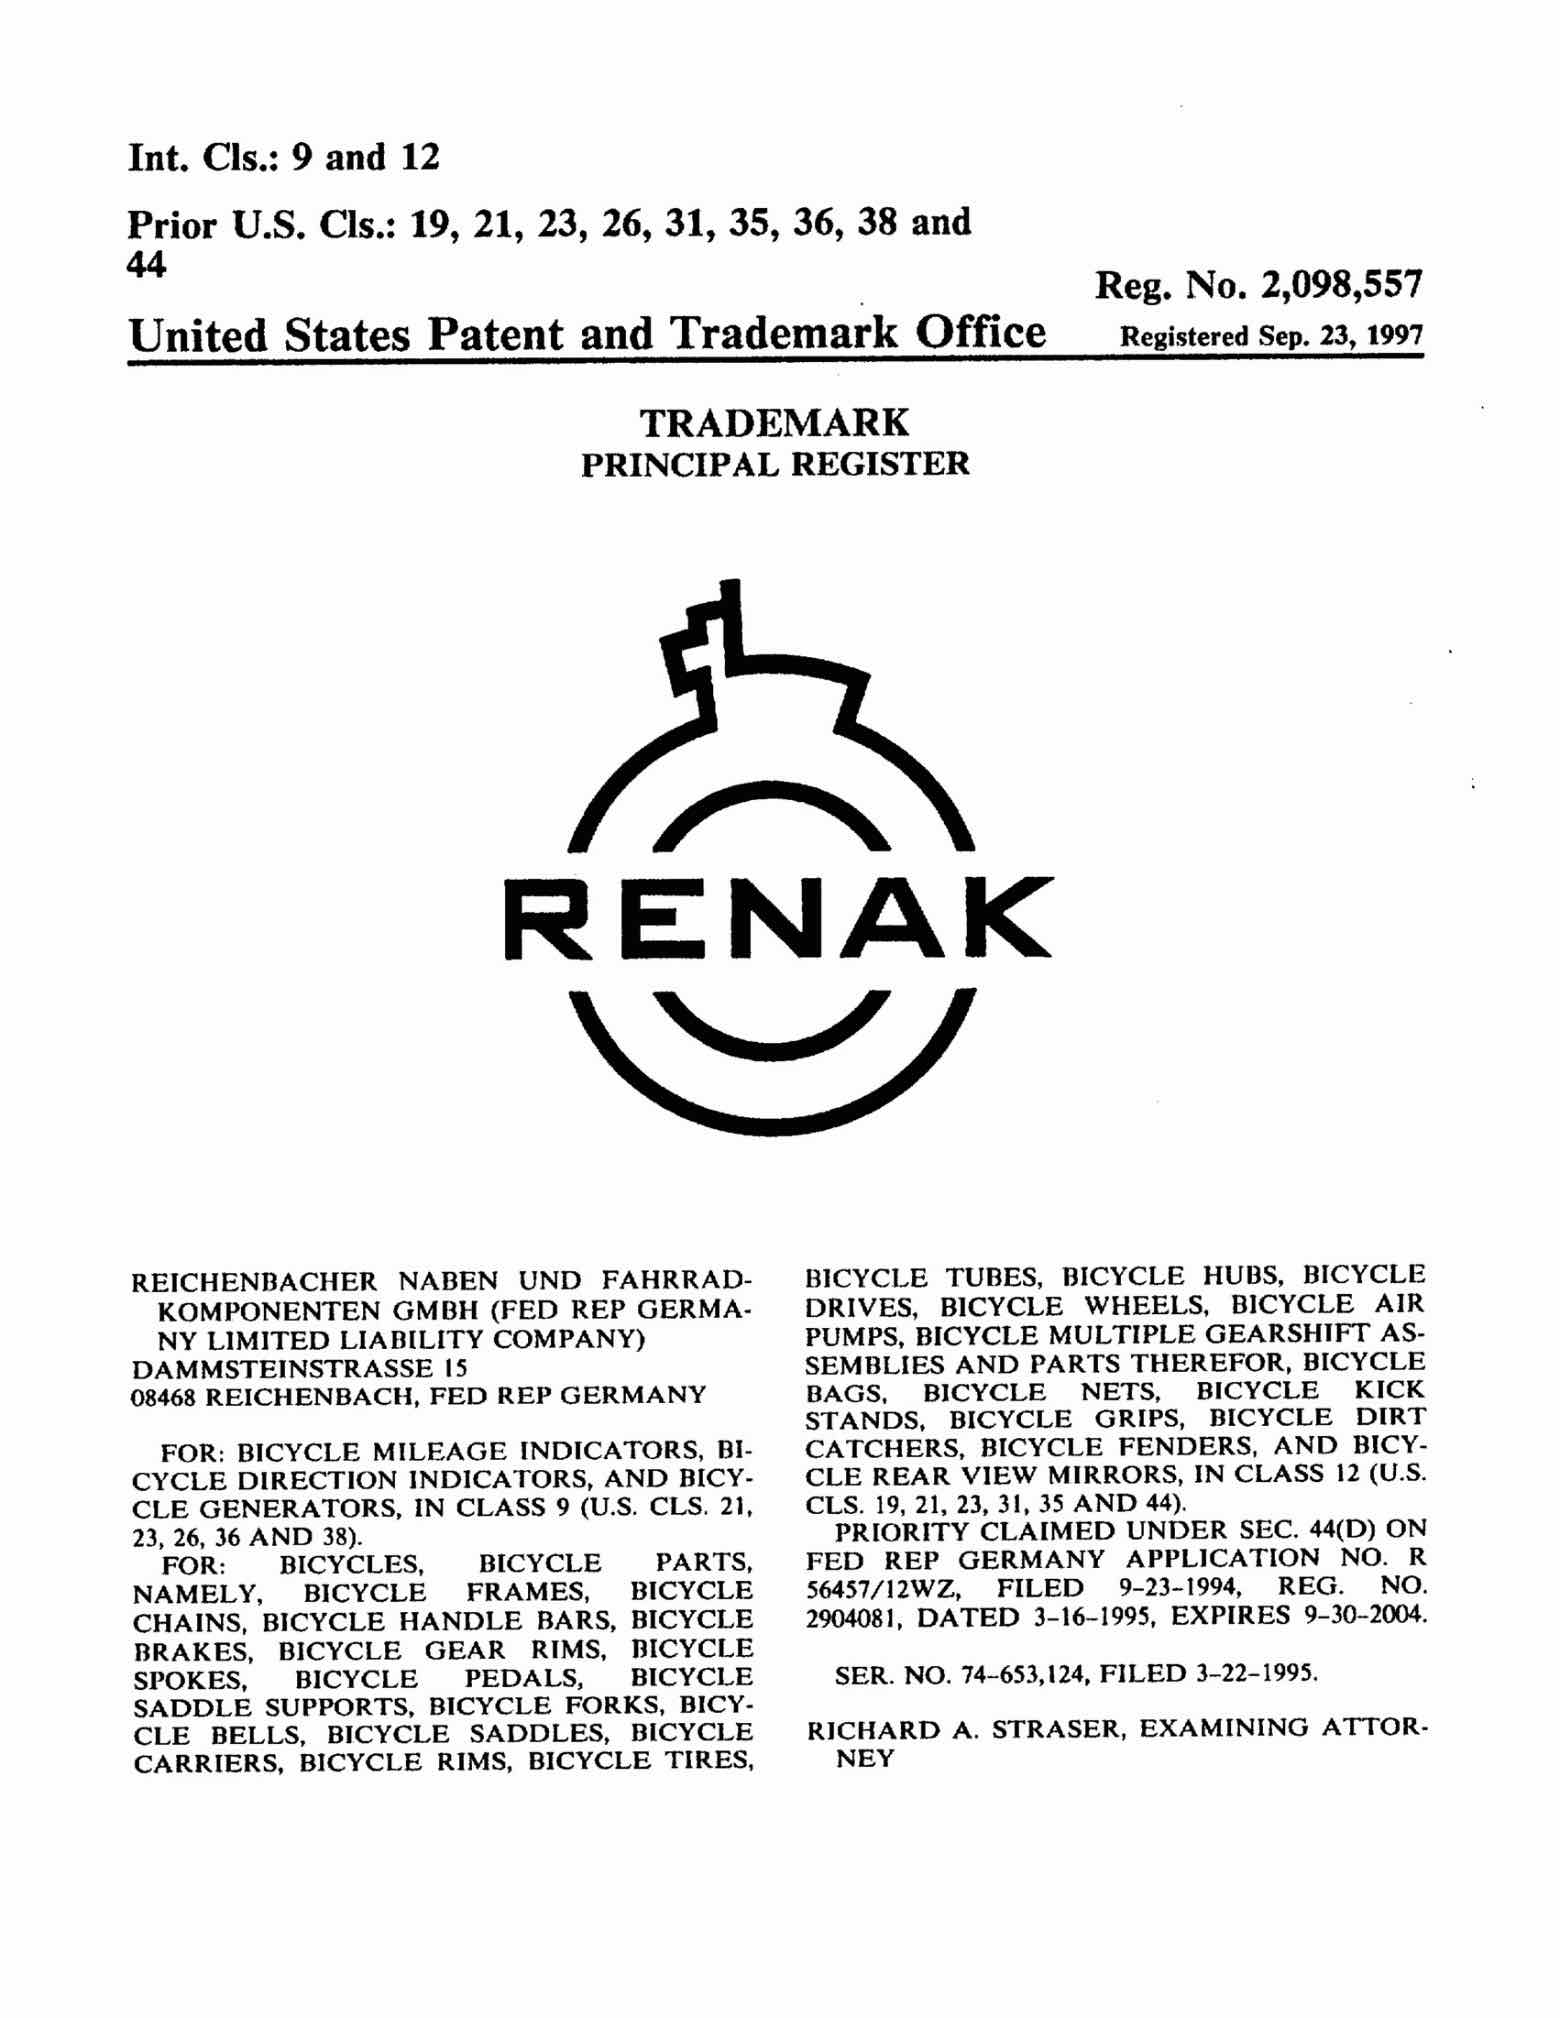 US Trademark 2,098,557 - Renak main image